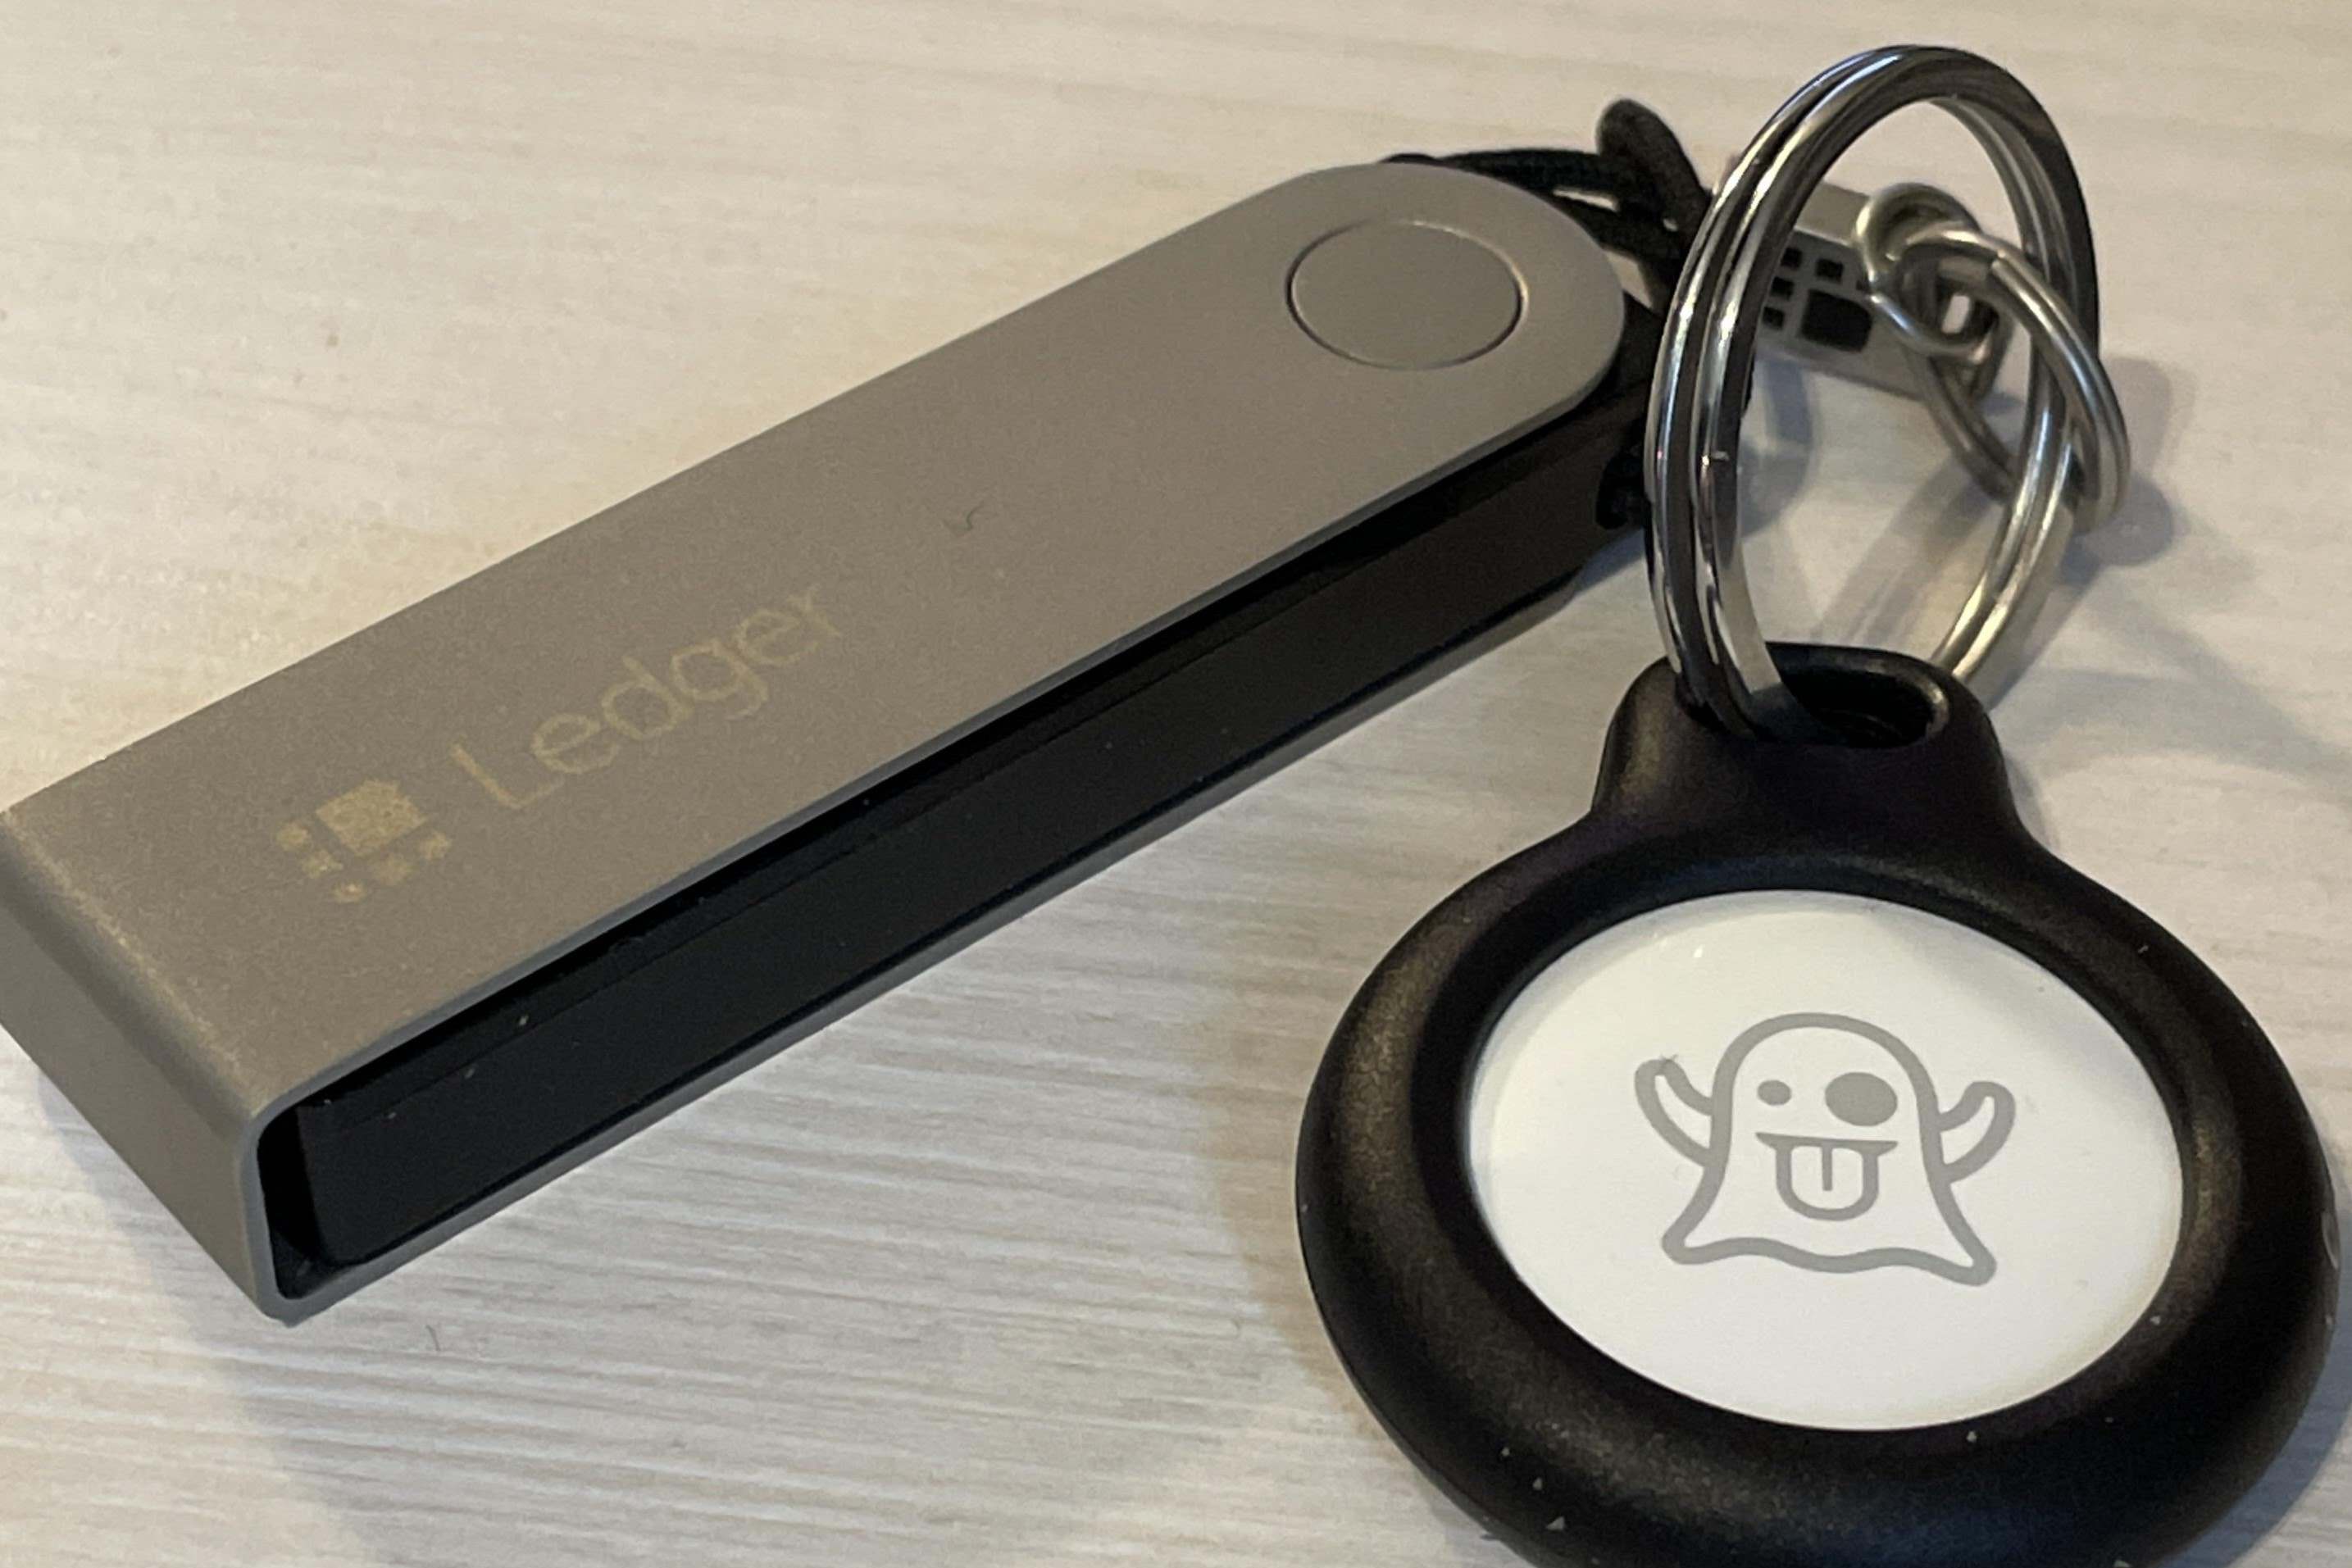 How To Put Ledger Nano S On Keychain